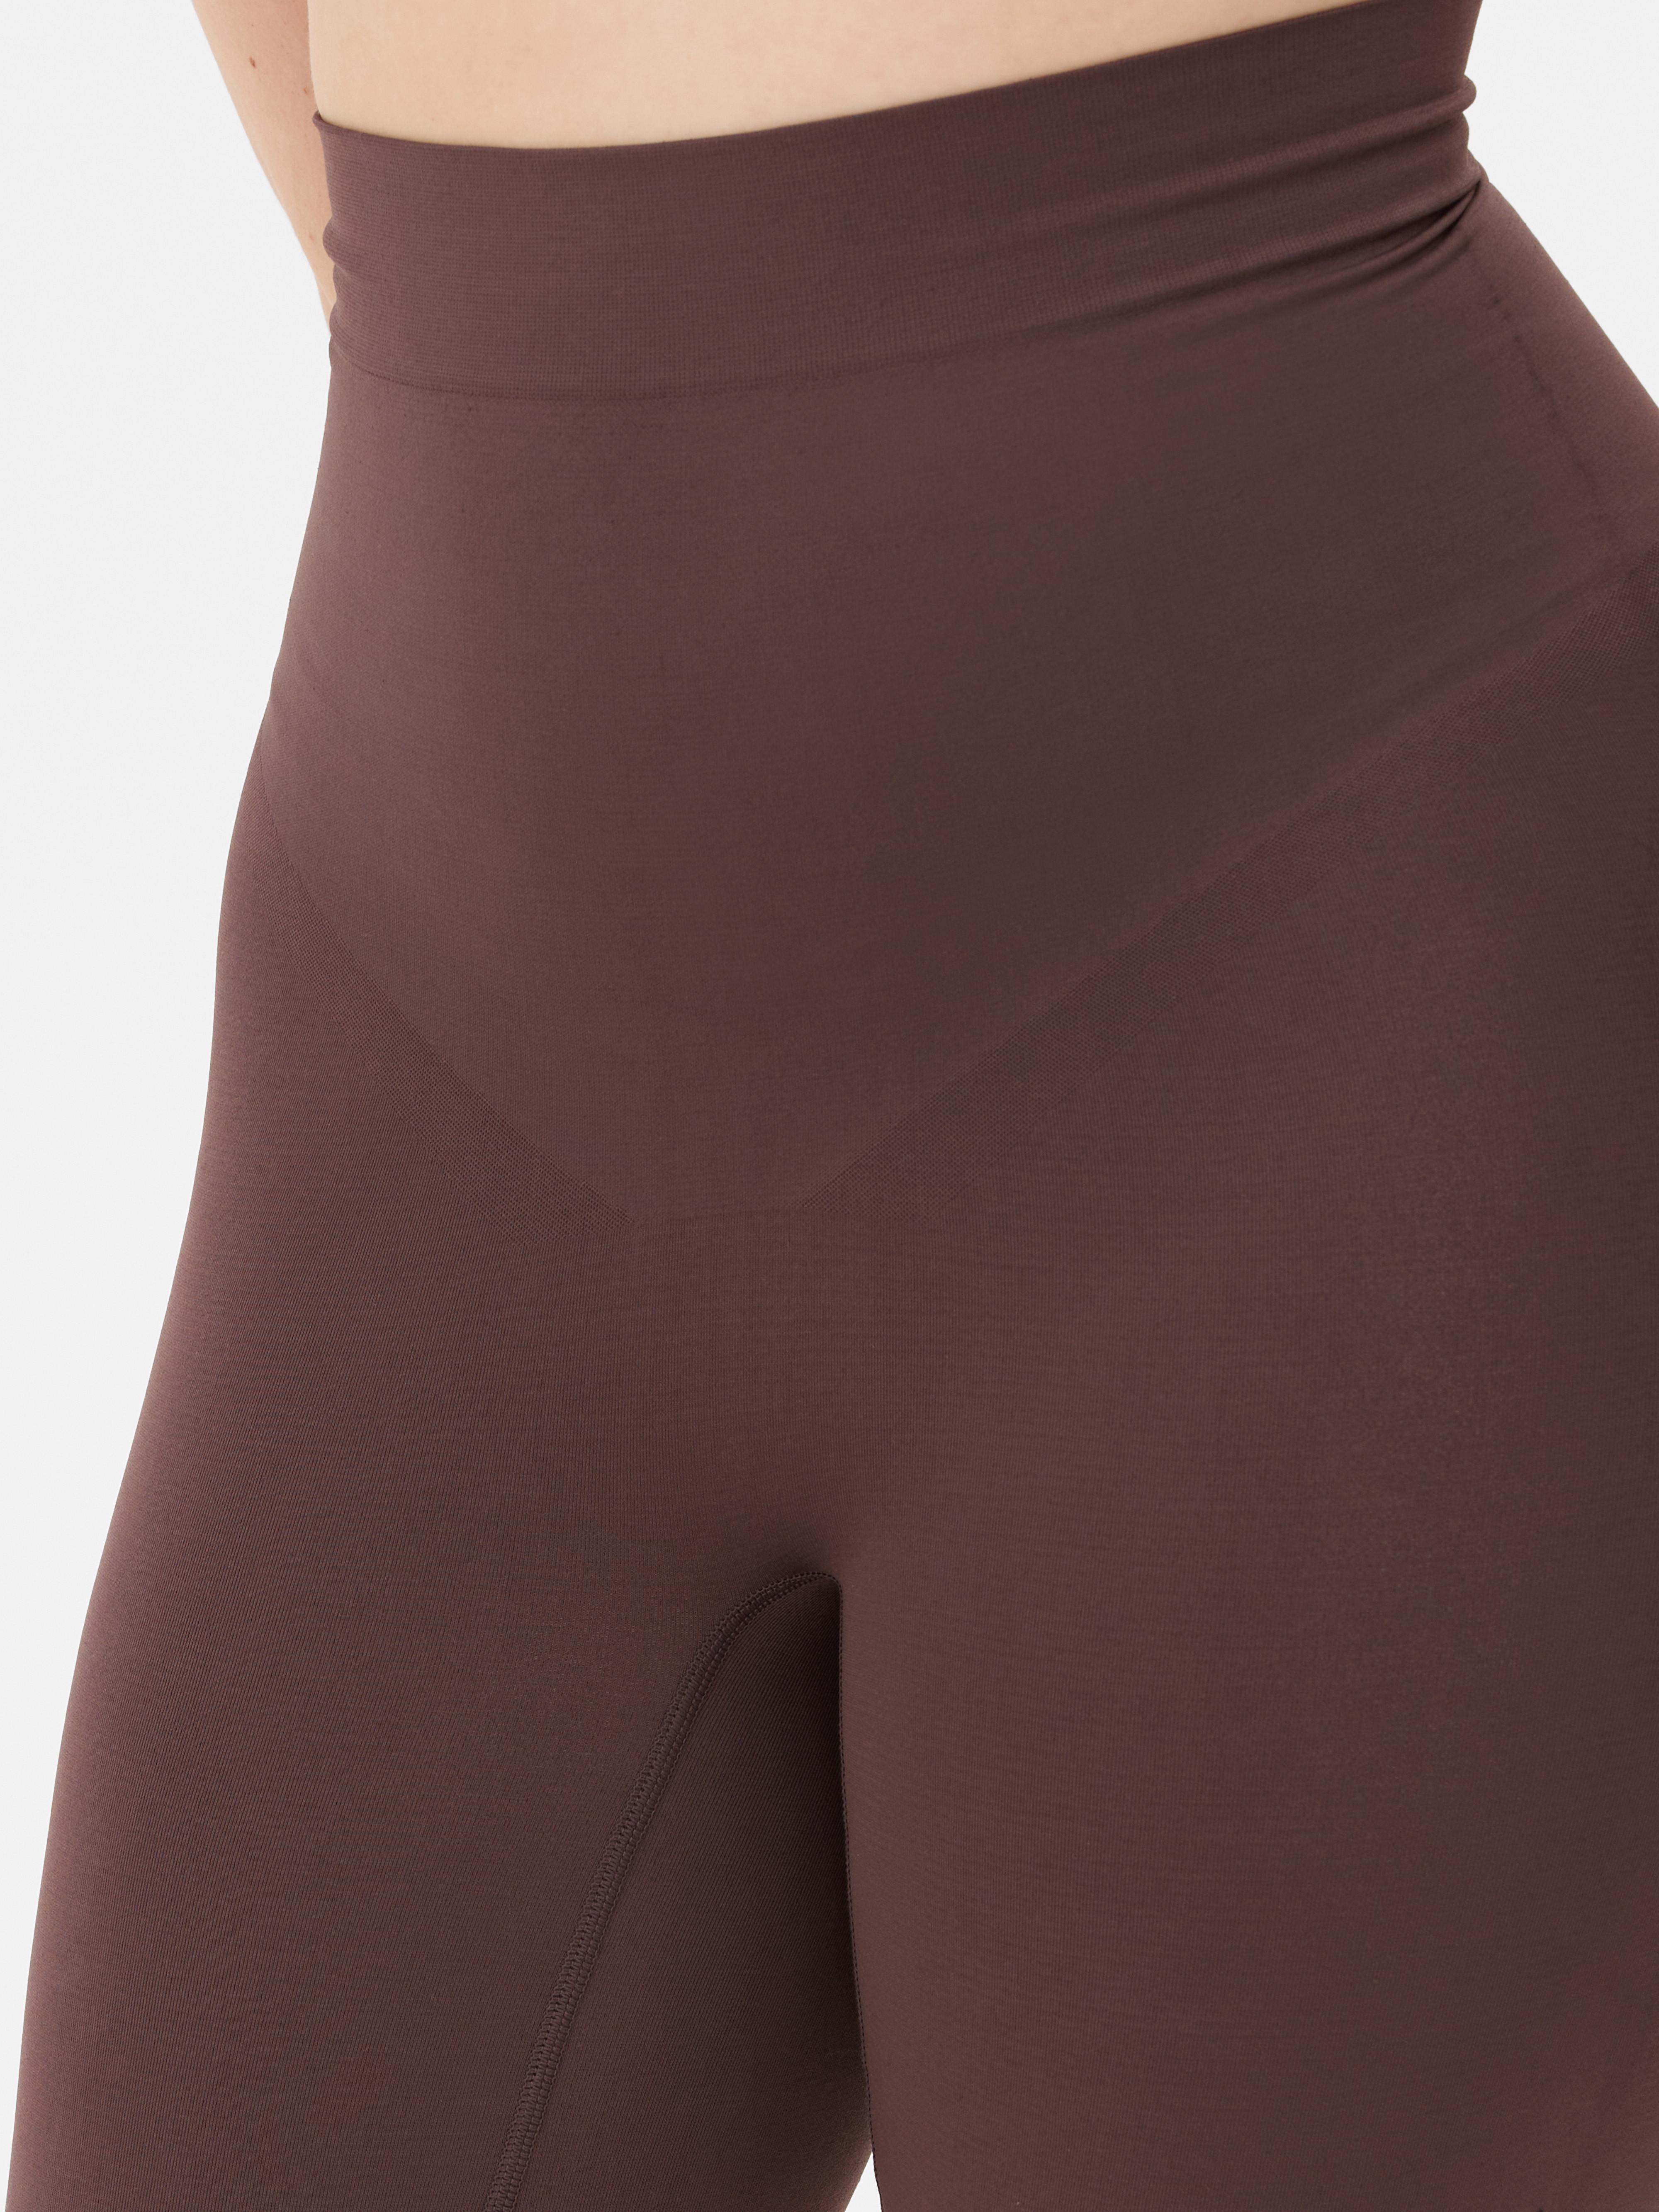 Primark Shapewear Seamfree Controlling Bumlift Shorts Taupe Size